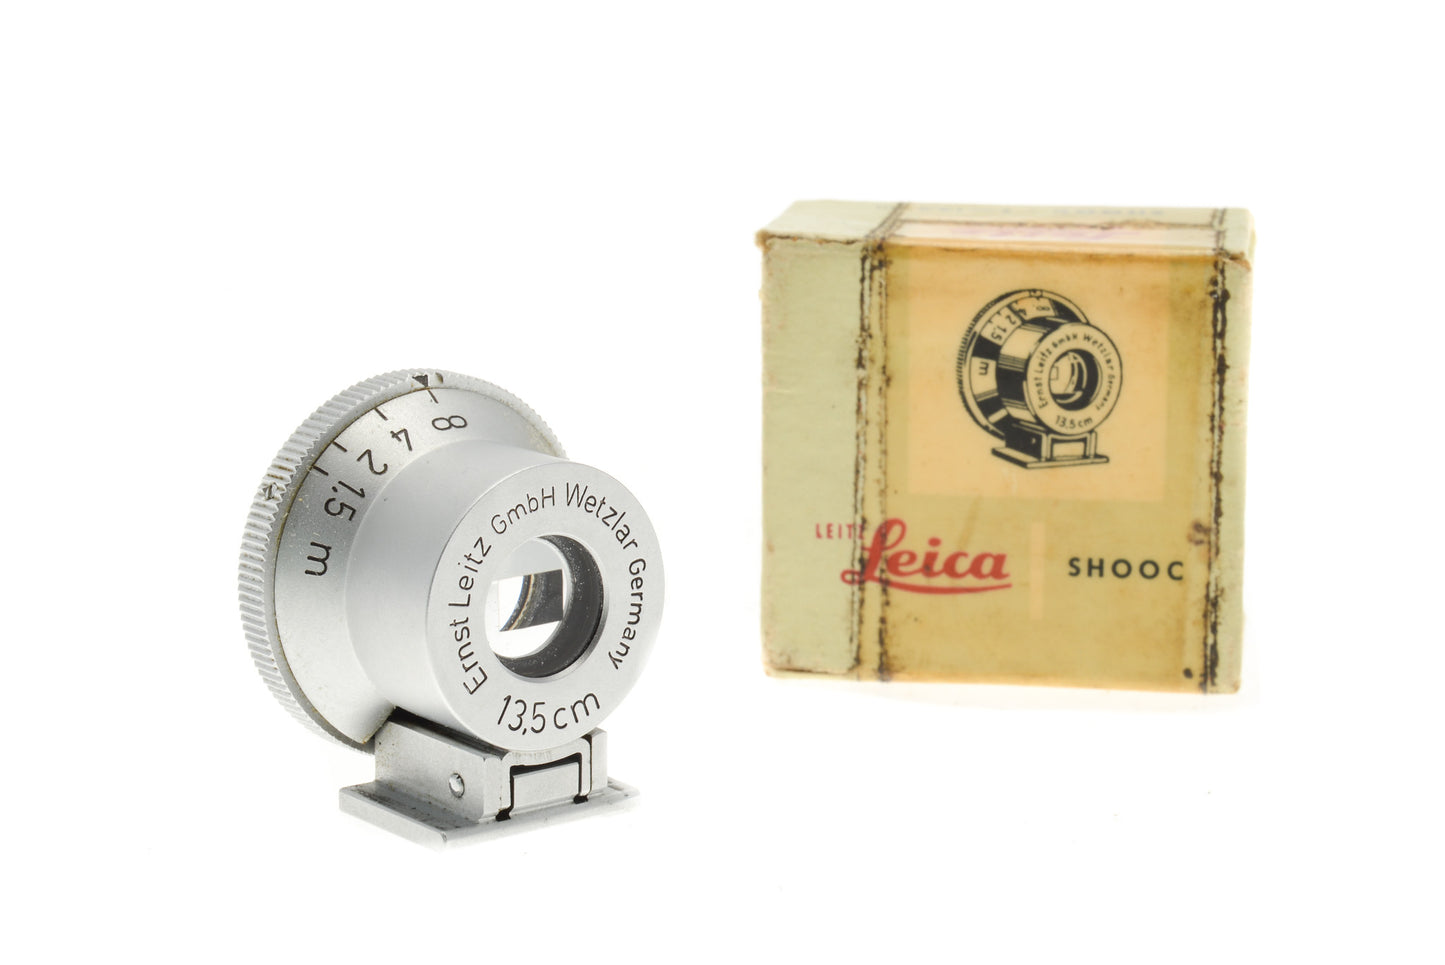 Leica 13.5cm Optical Viewfinder (SHOOC)